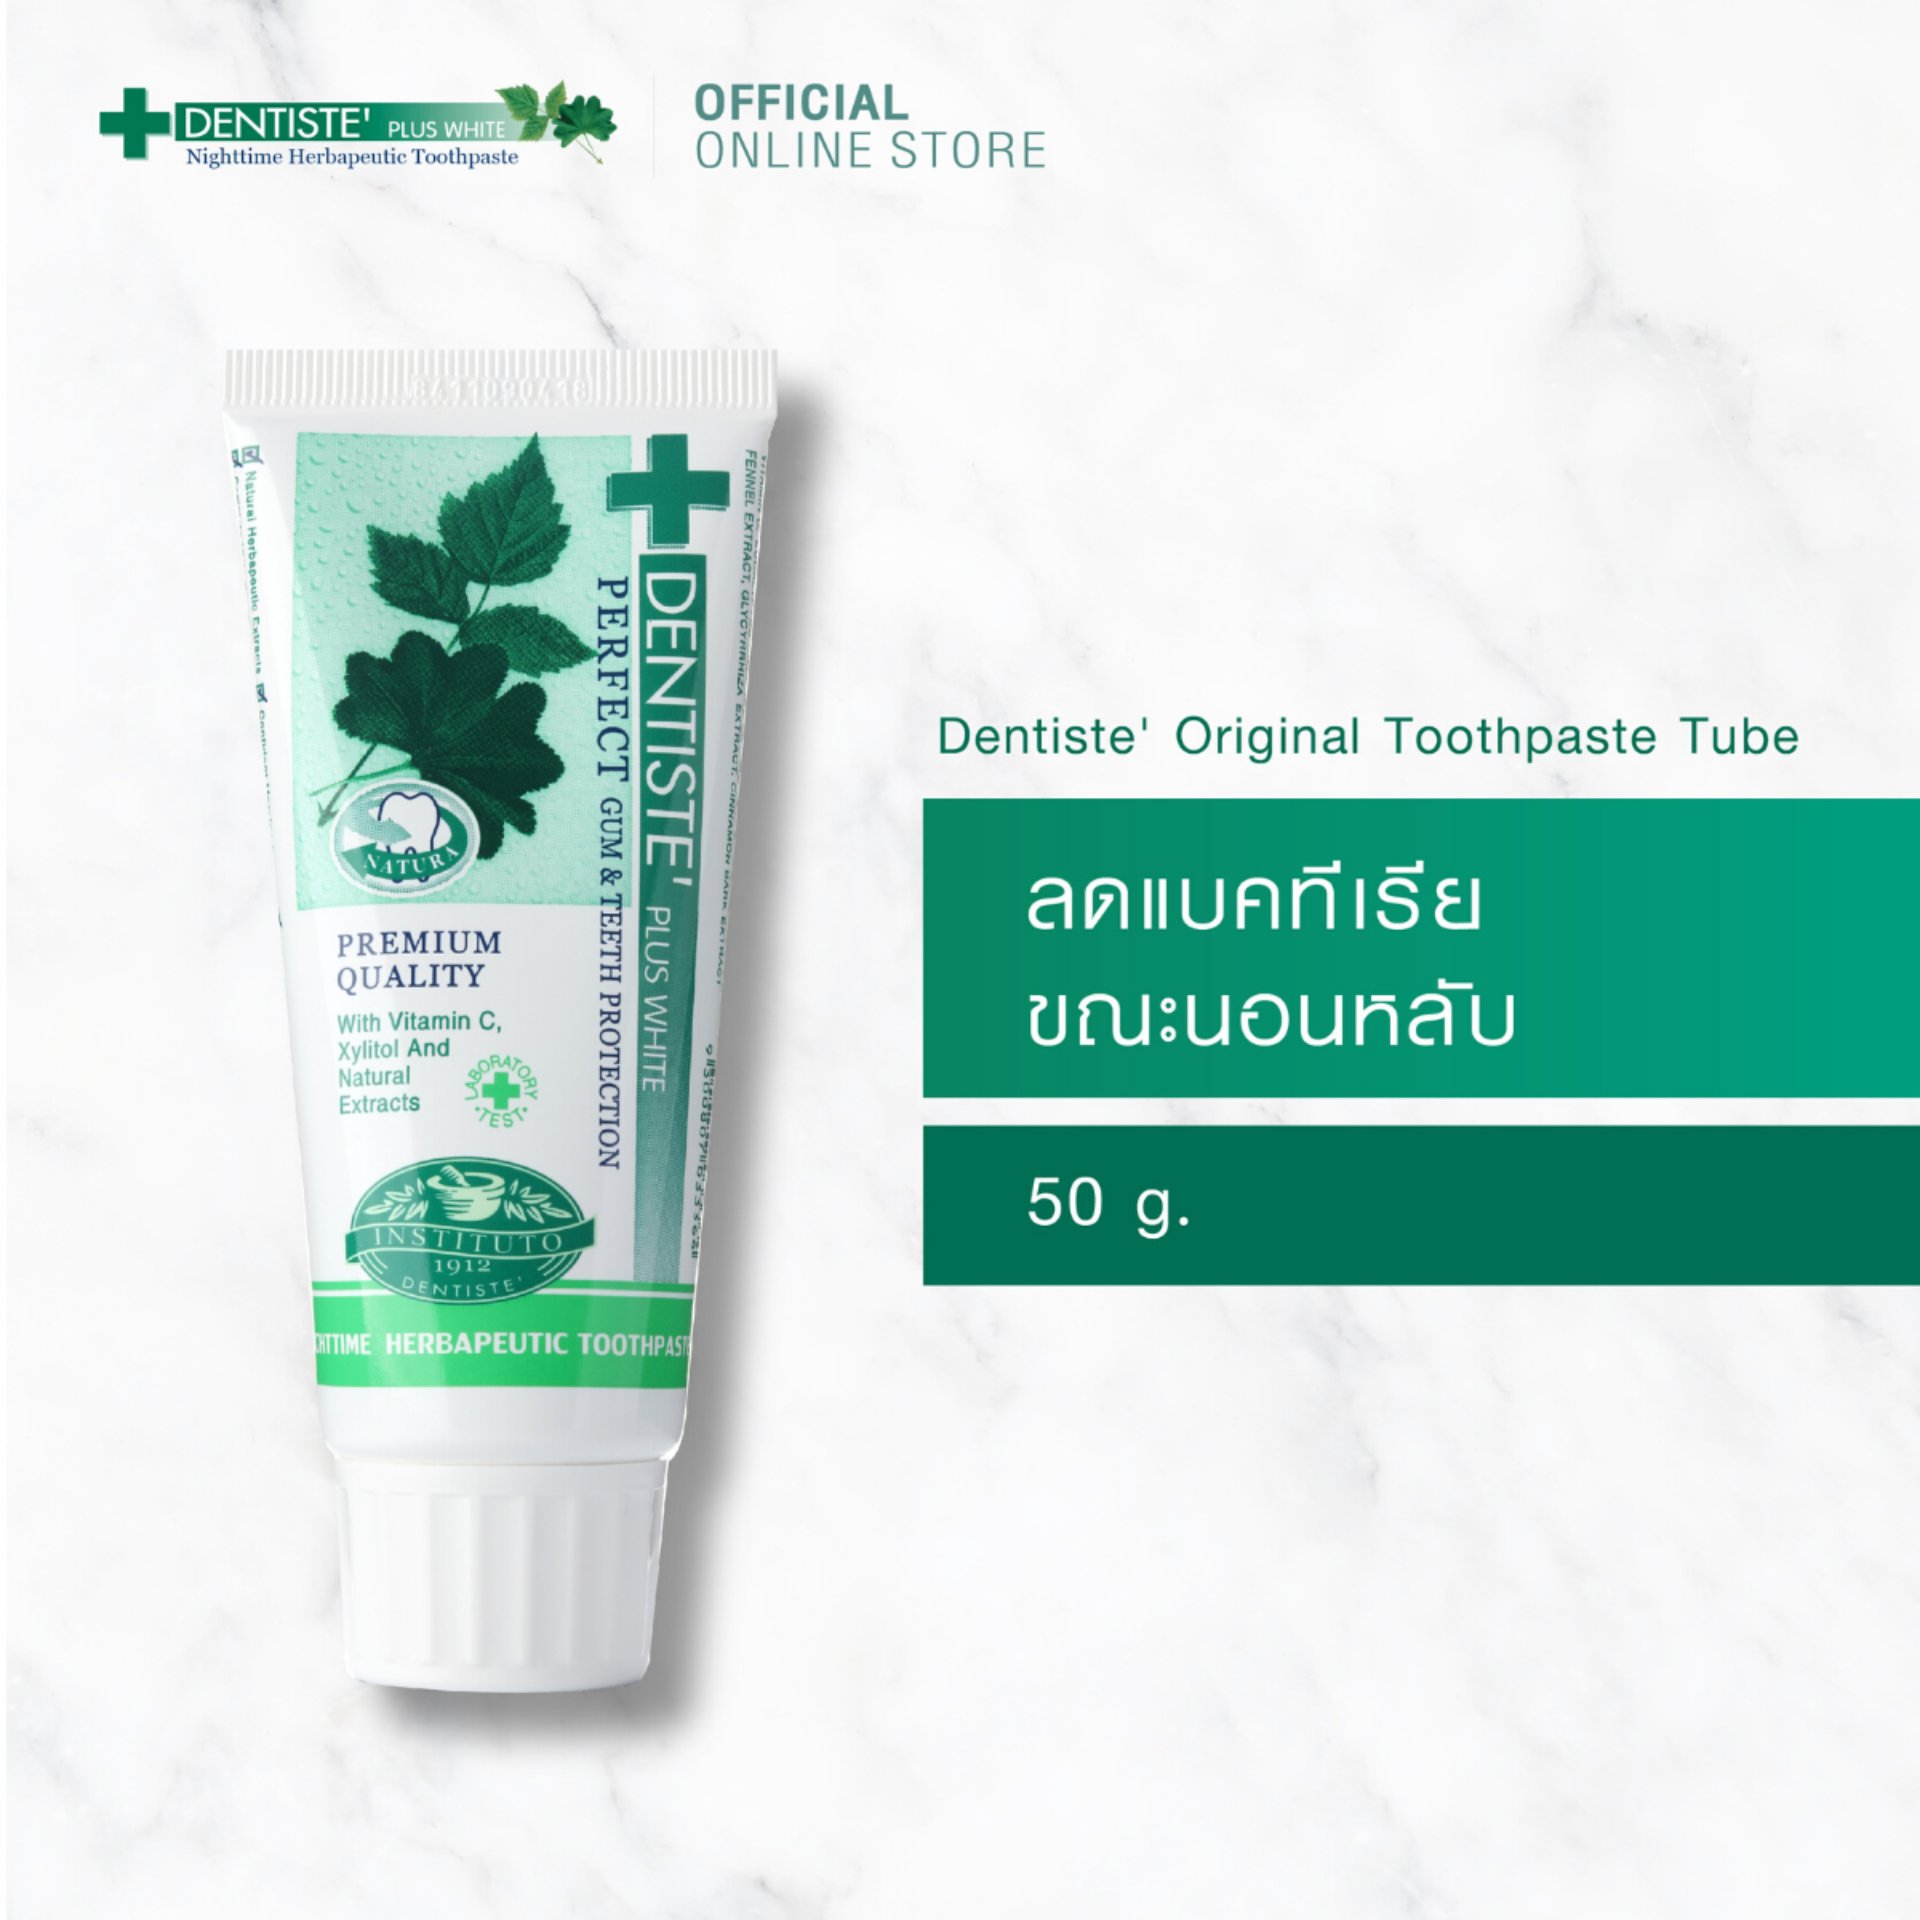 Dentiste' Original Toothpaste Tube - เดนทิสเต้ ยาสีฟัน สูตรออริจินัล แบบหลอด ขนาด 20 G./ 50 G